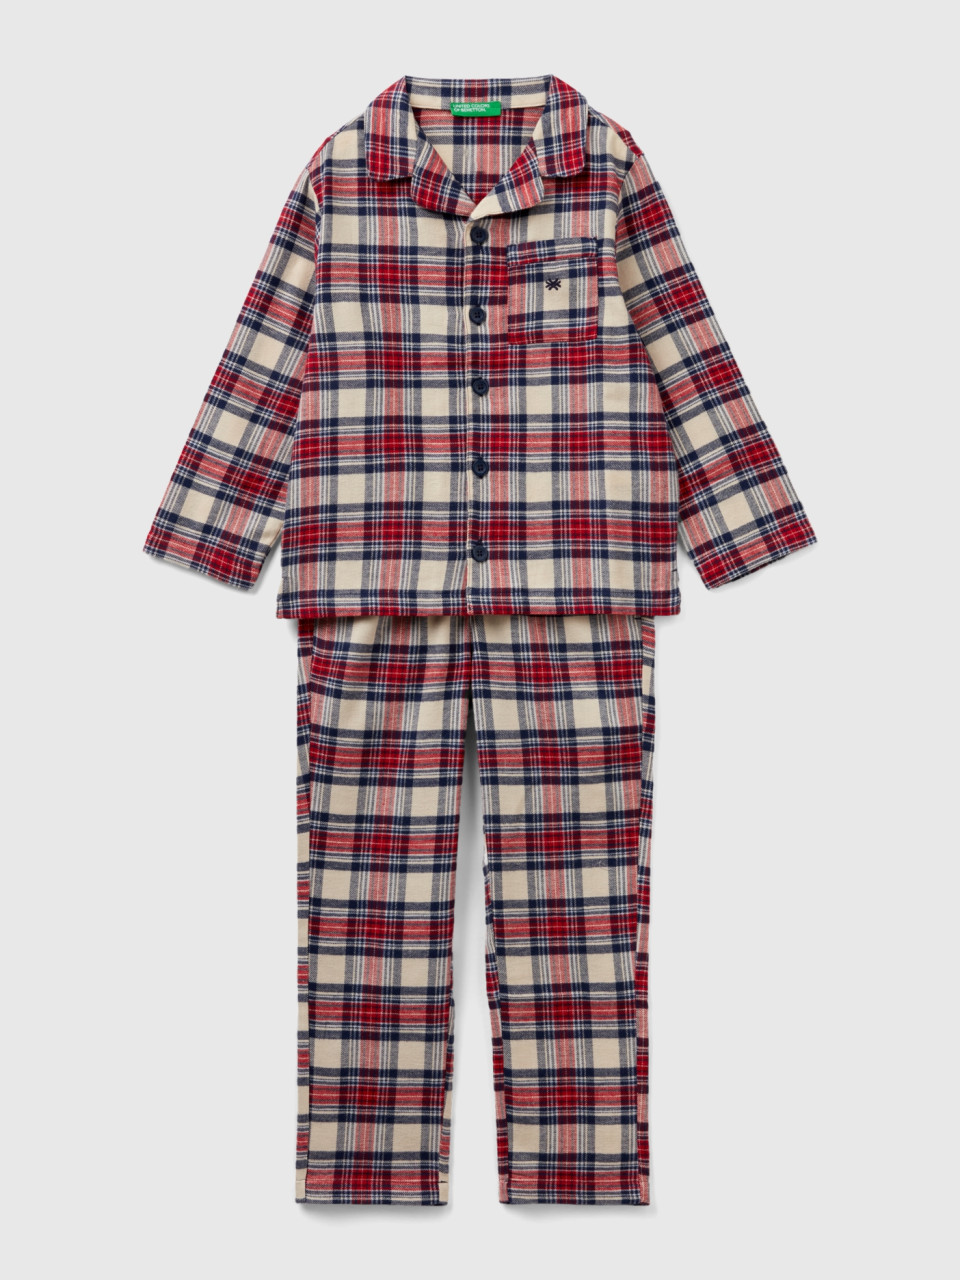 Benetton, Flannel Tartan Pyjamas, Multi-color, Kids